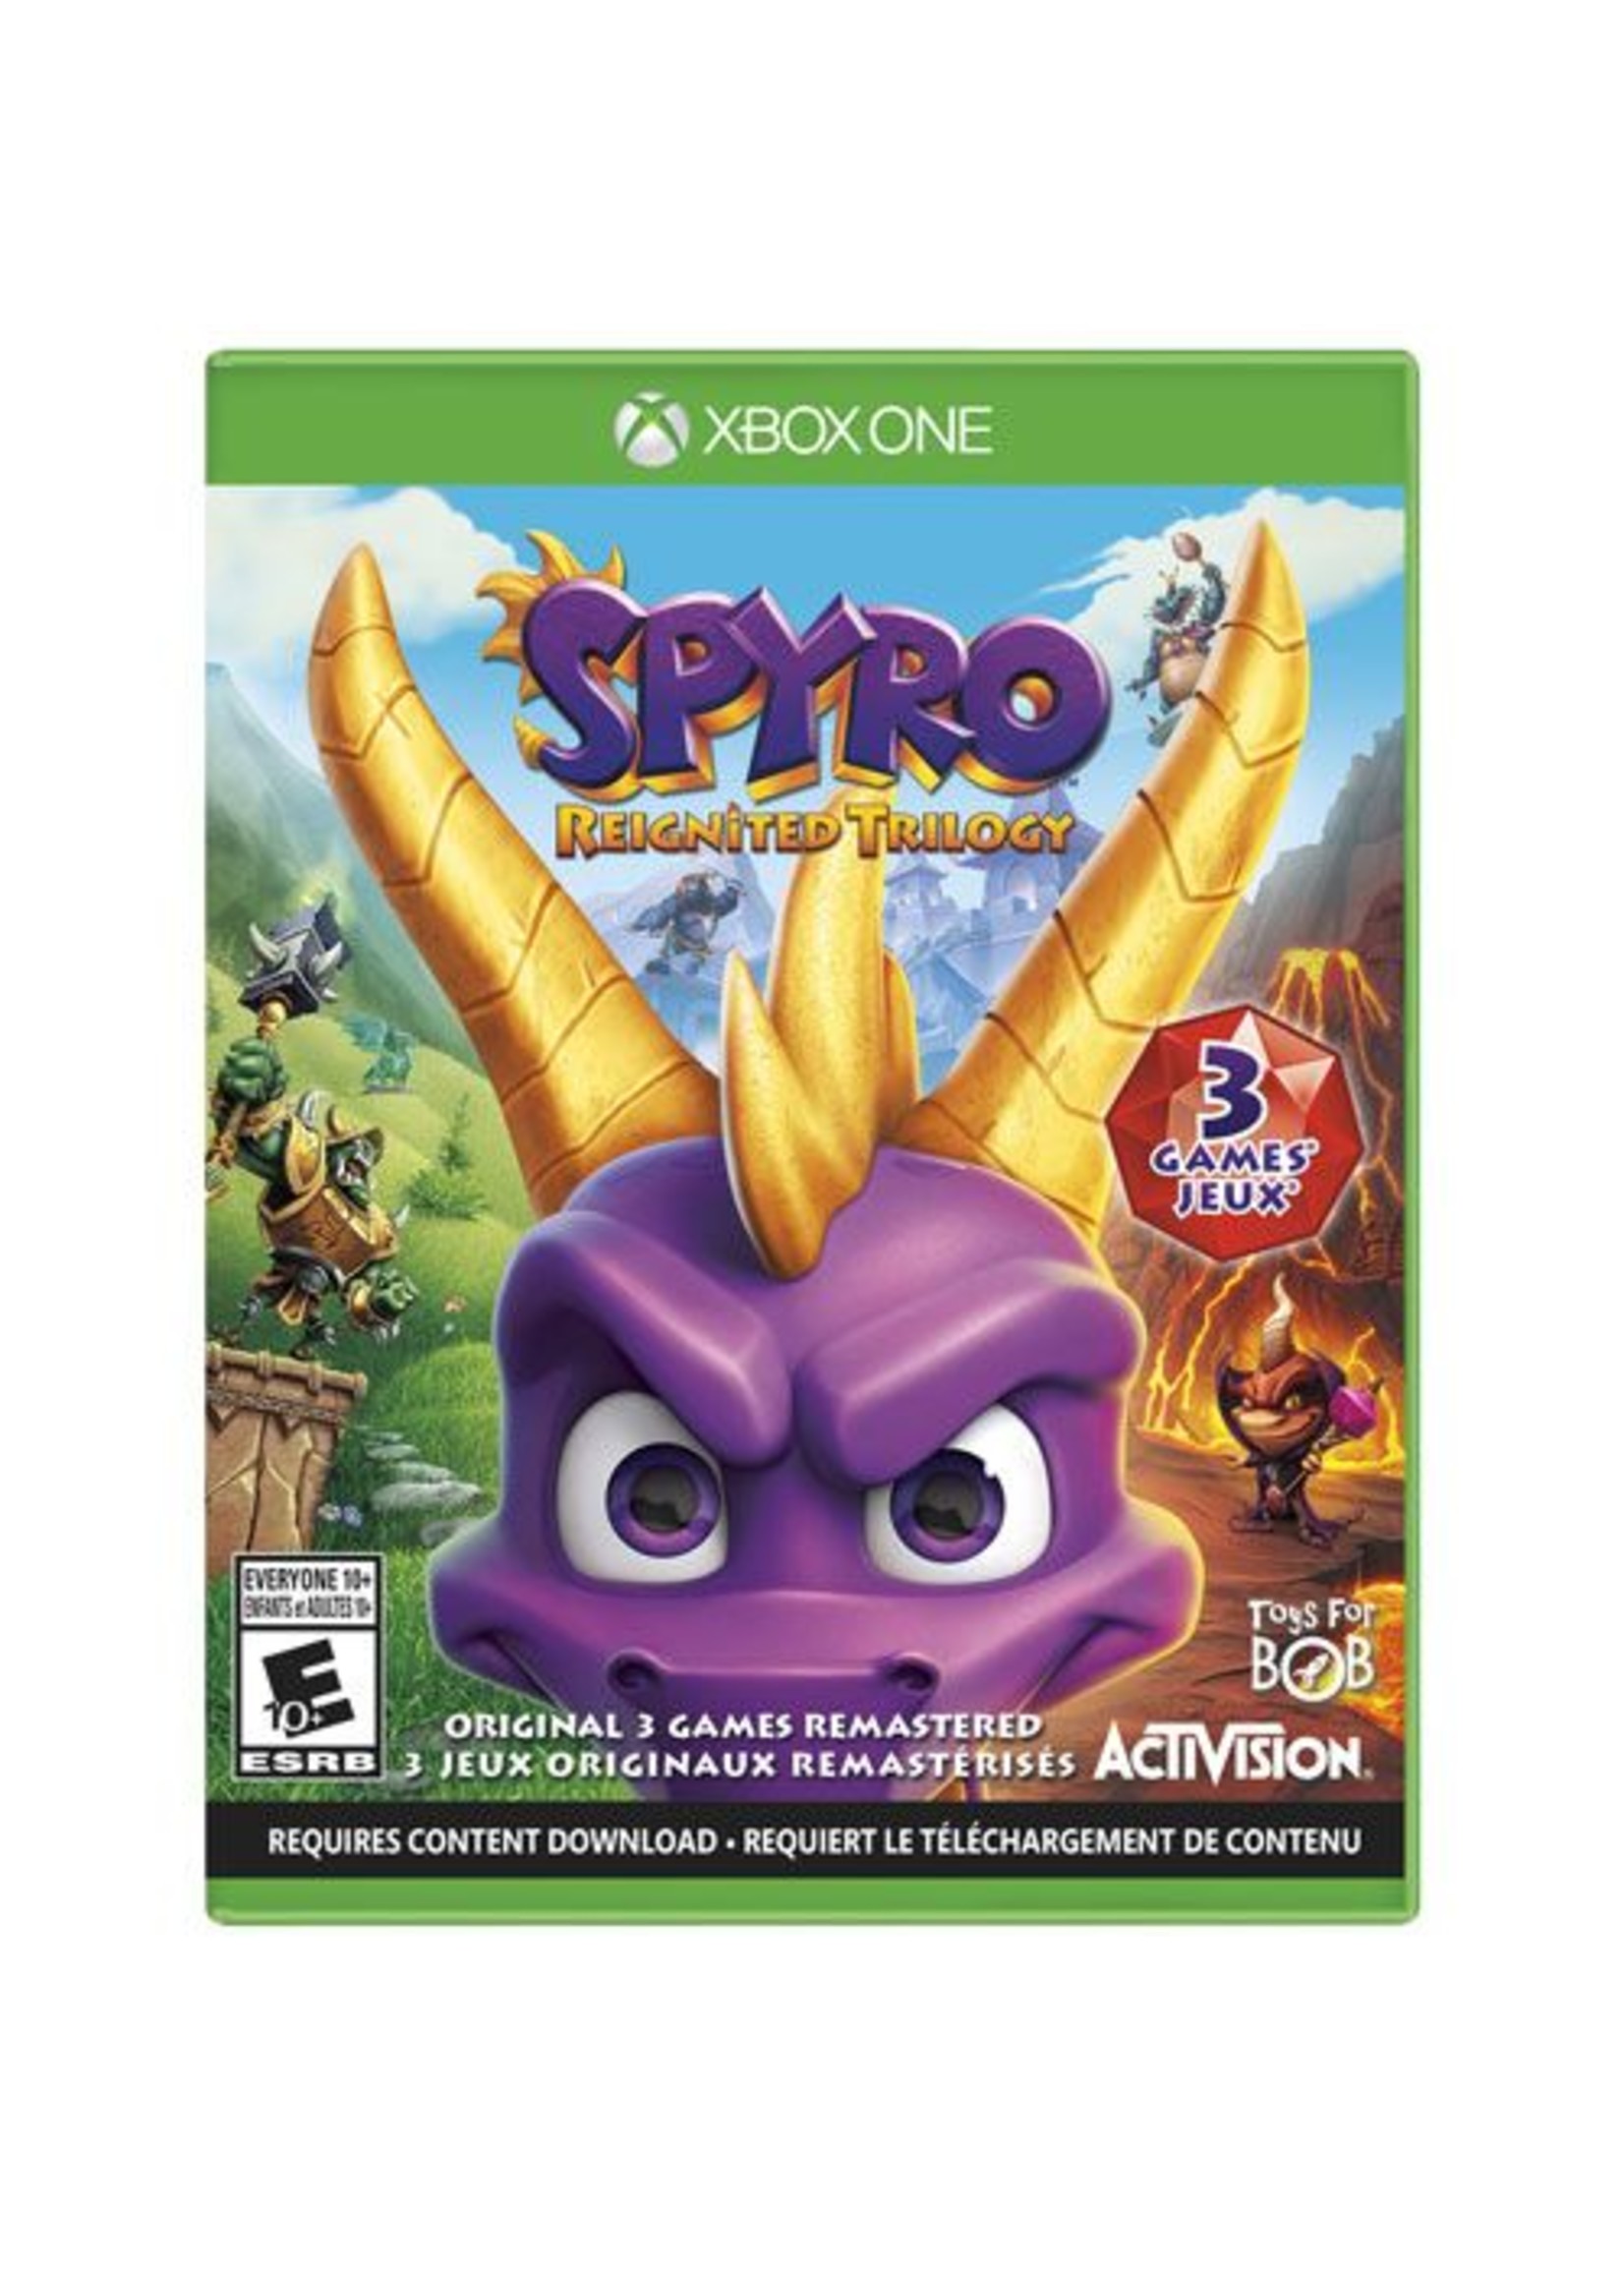 Spyro Reignited Trilogy - XBOne NEW